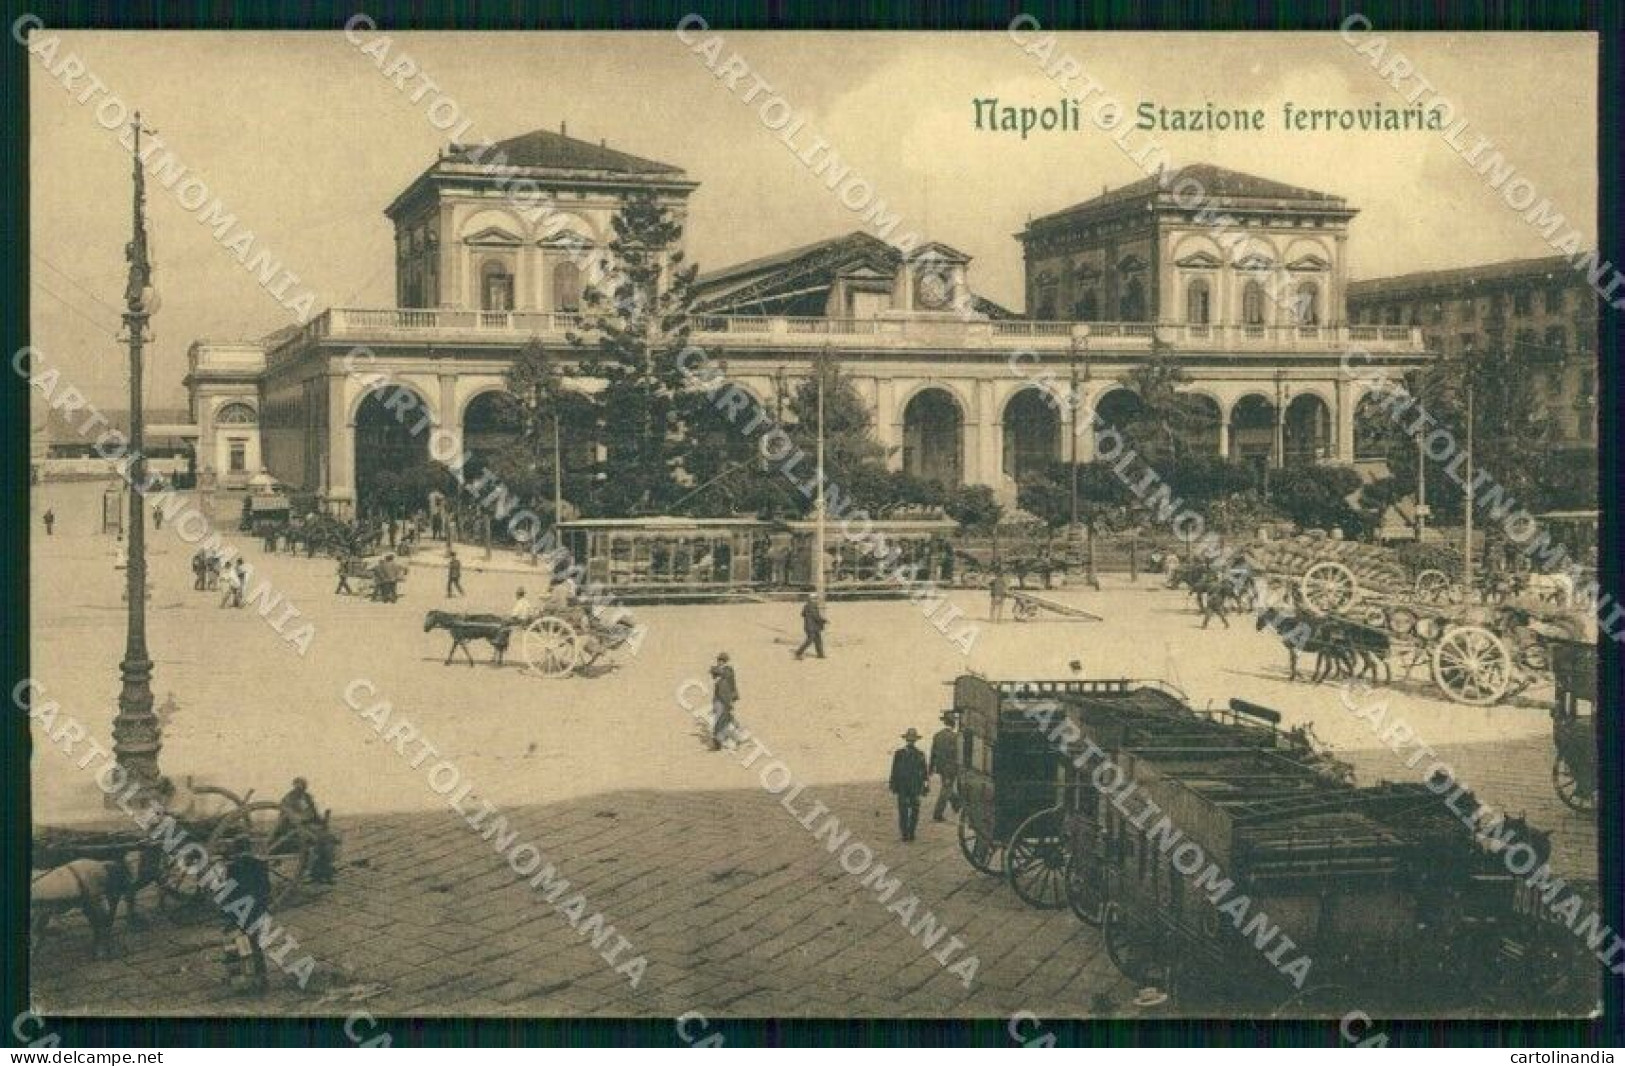 Napoli Città Stazione Ferroviaria Tram Ragozino 21912 147 Cartolina MX5620 - Napoli (Naples)